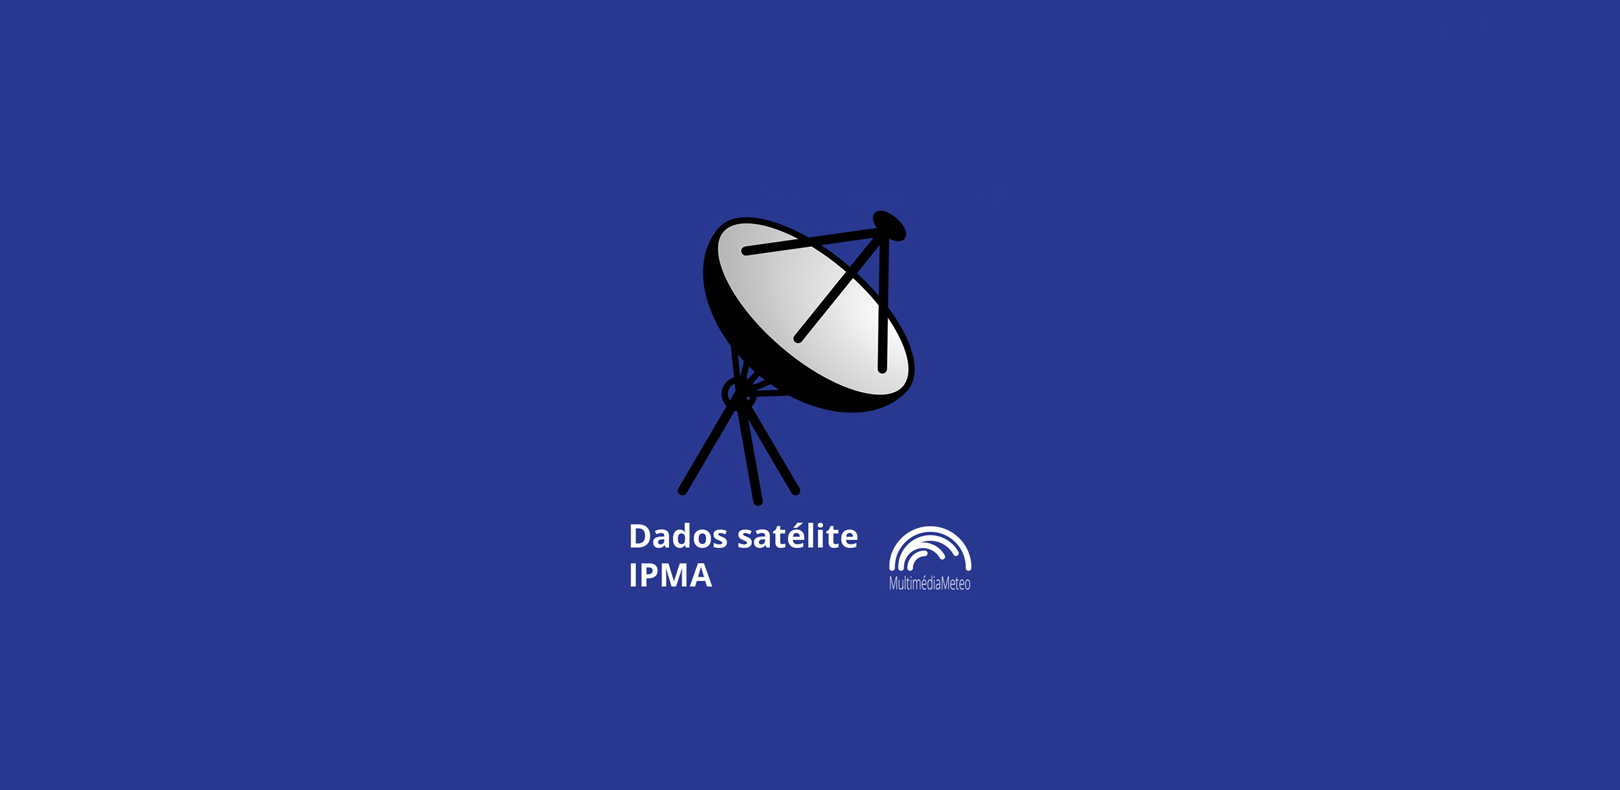  Dados Satélite IPMA